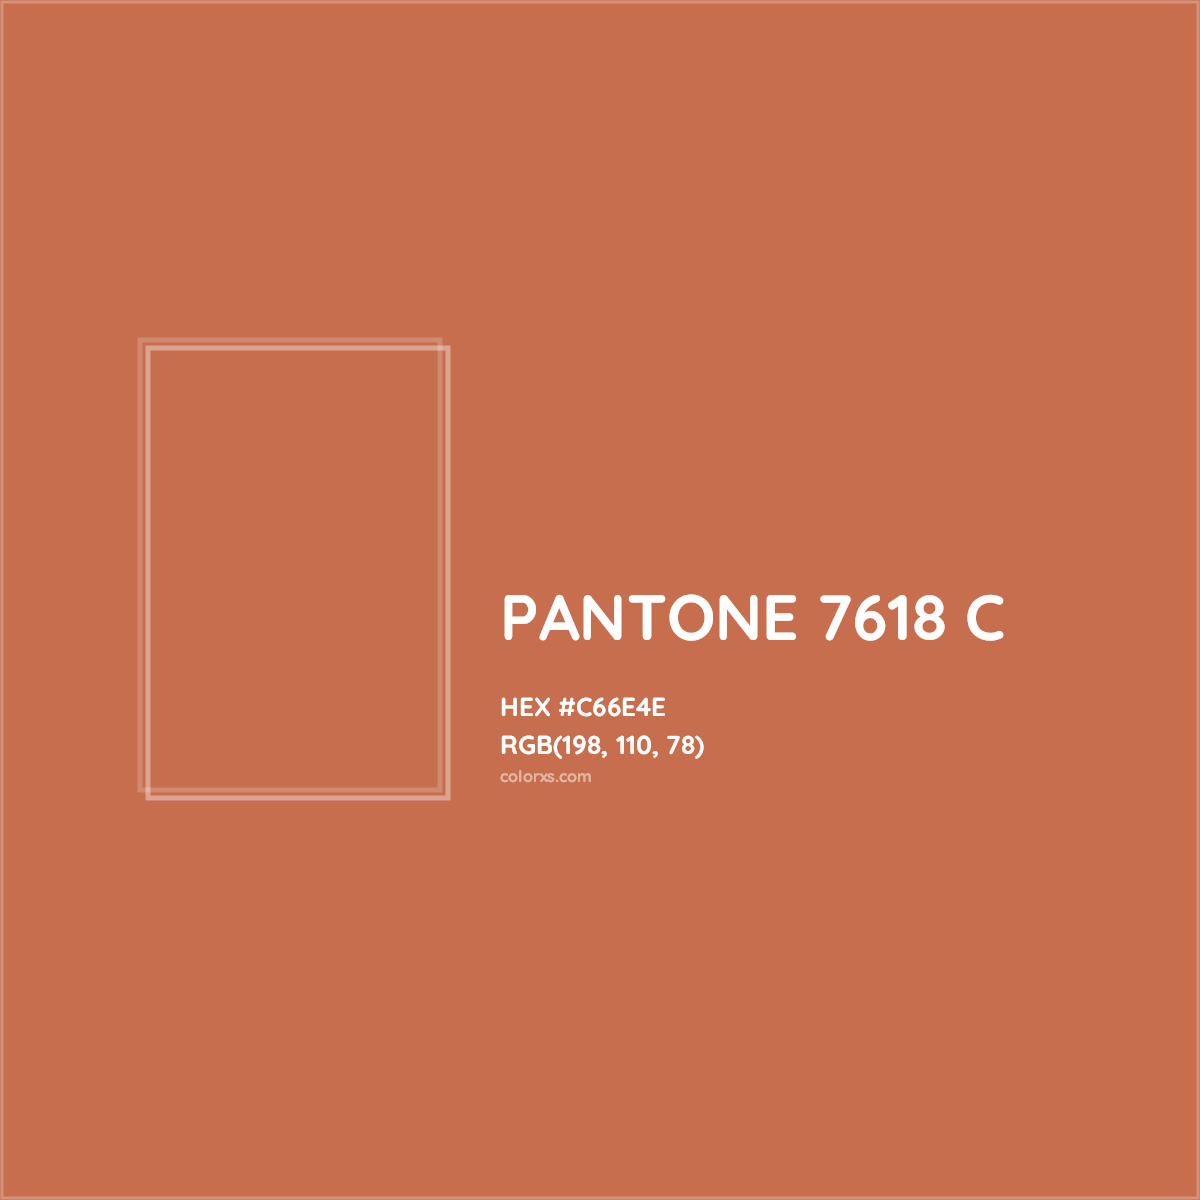 HEX #C66E4E PANTONE 7618 C CMS Pantone PMS - Color Code